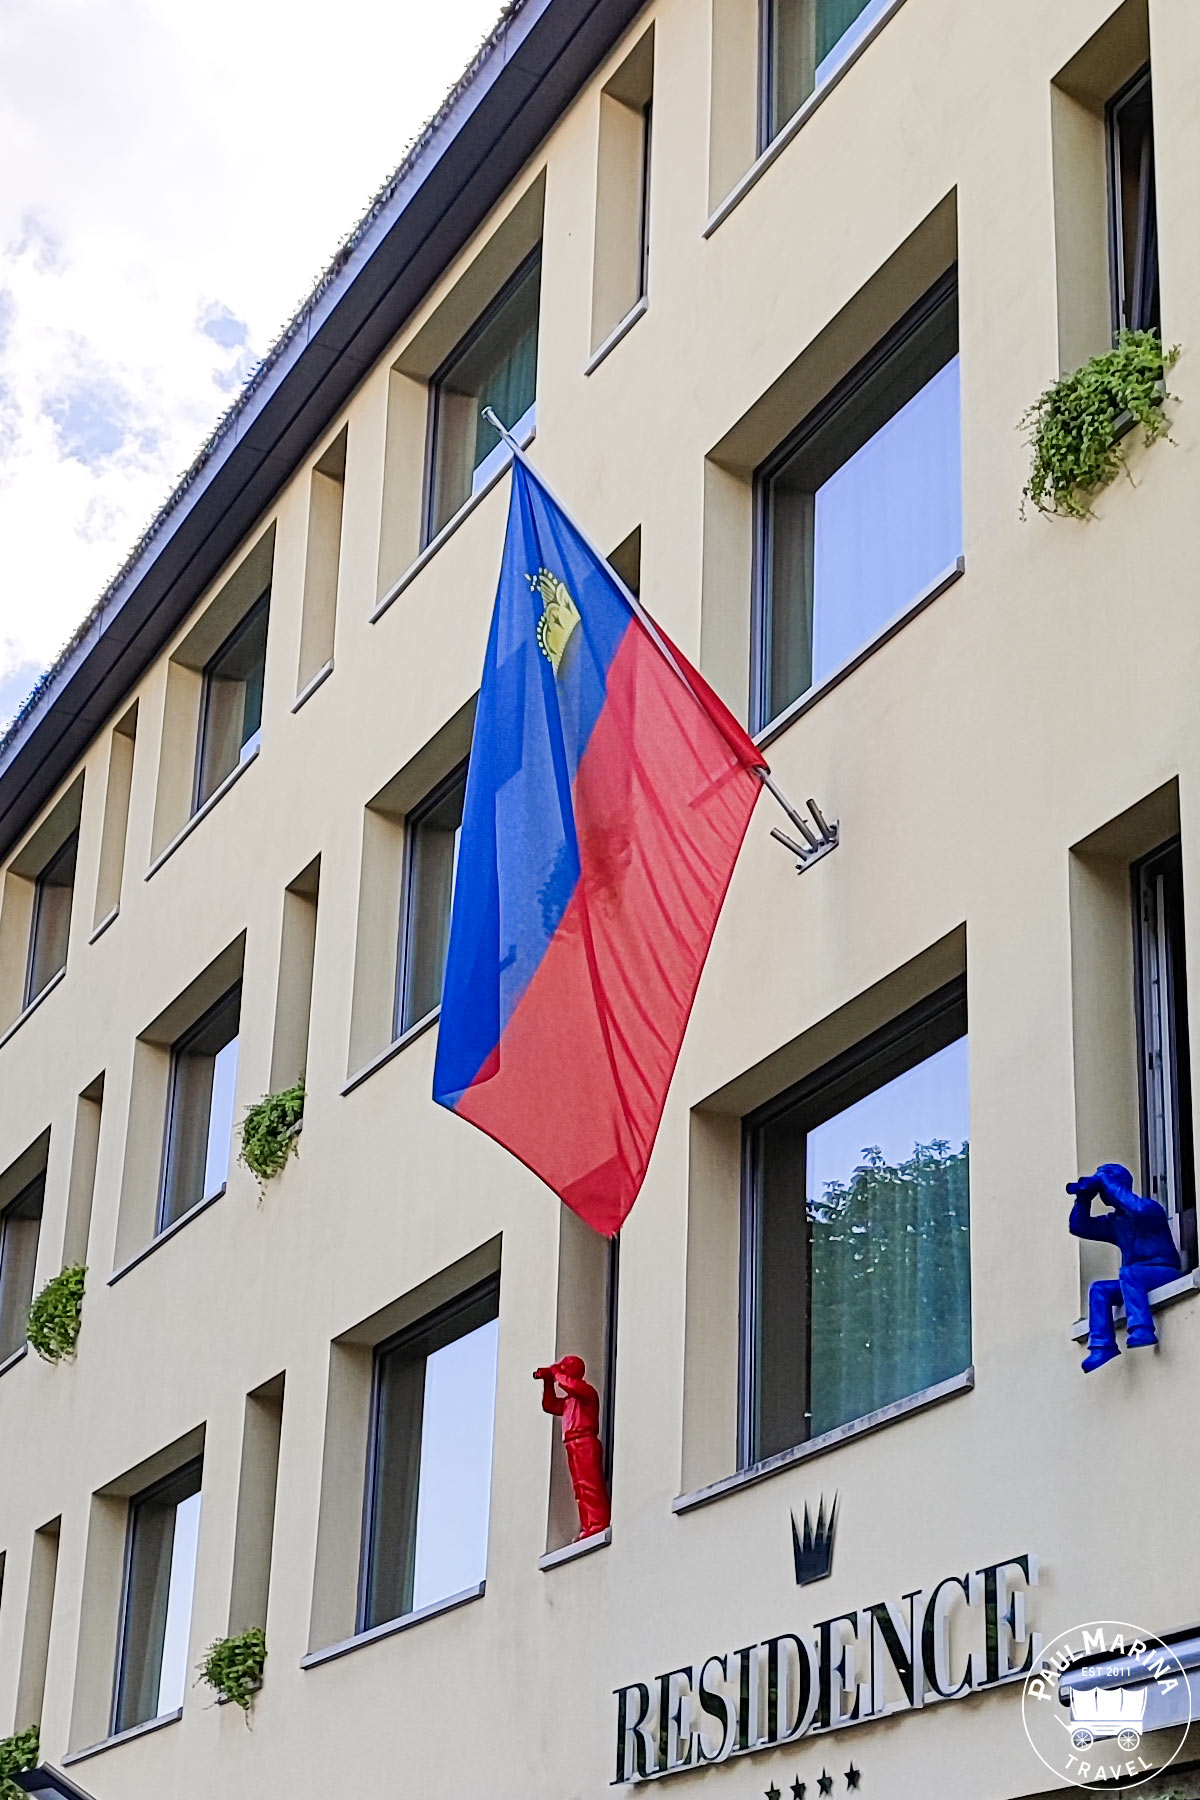 Flag of the principality of Liechtenstein